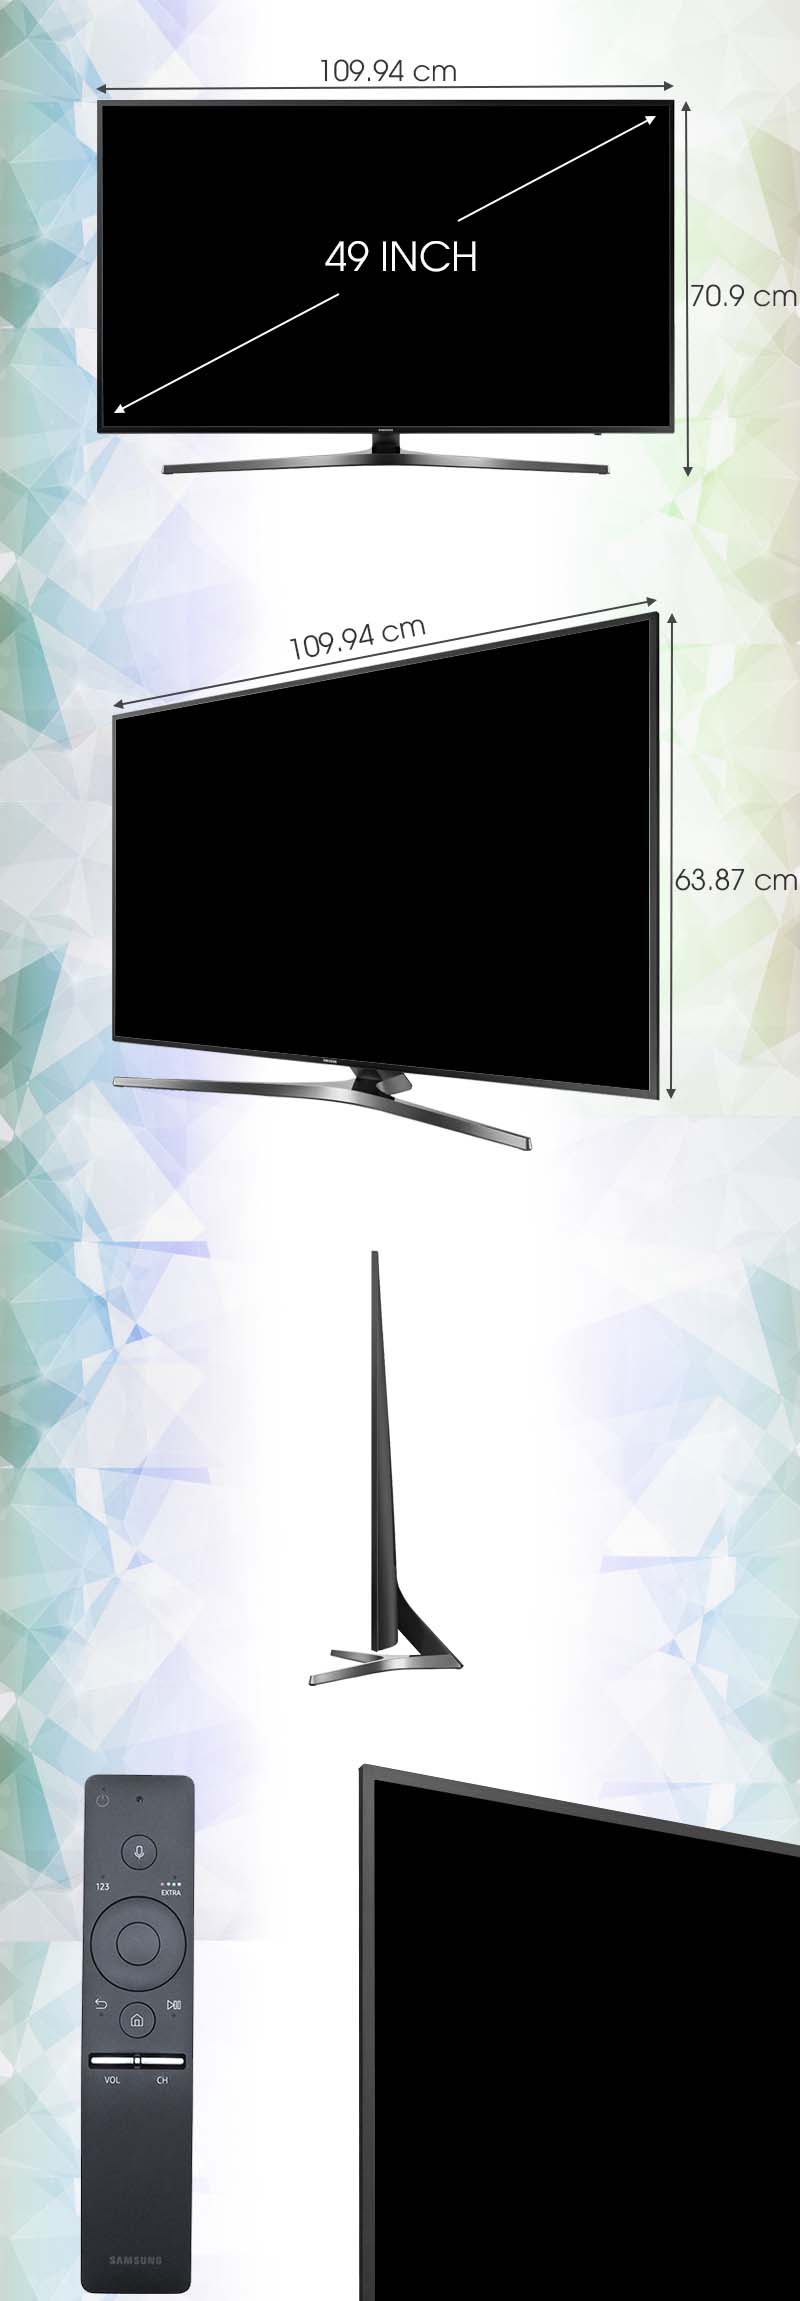 Smart Tivi Samsung 49 inch UA49KU6400 - Kích thước TV